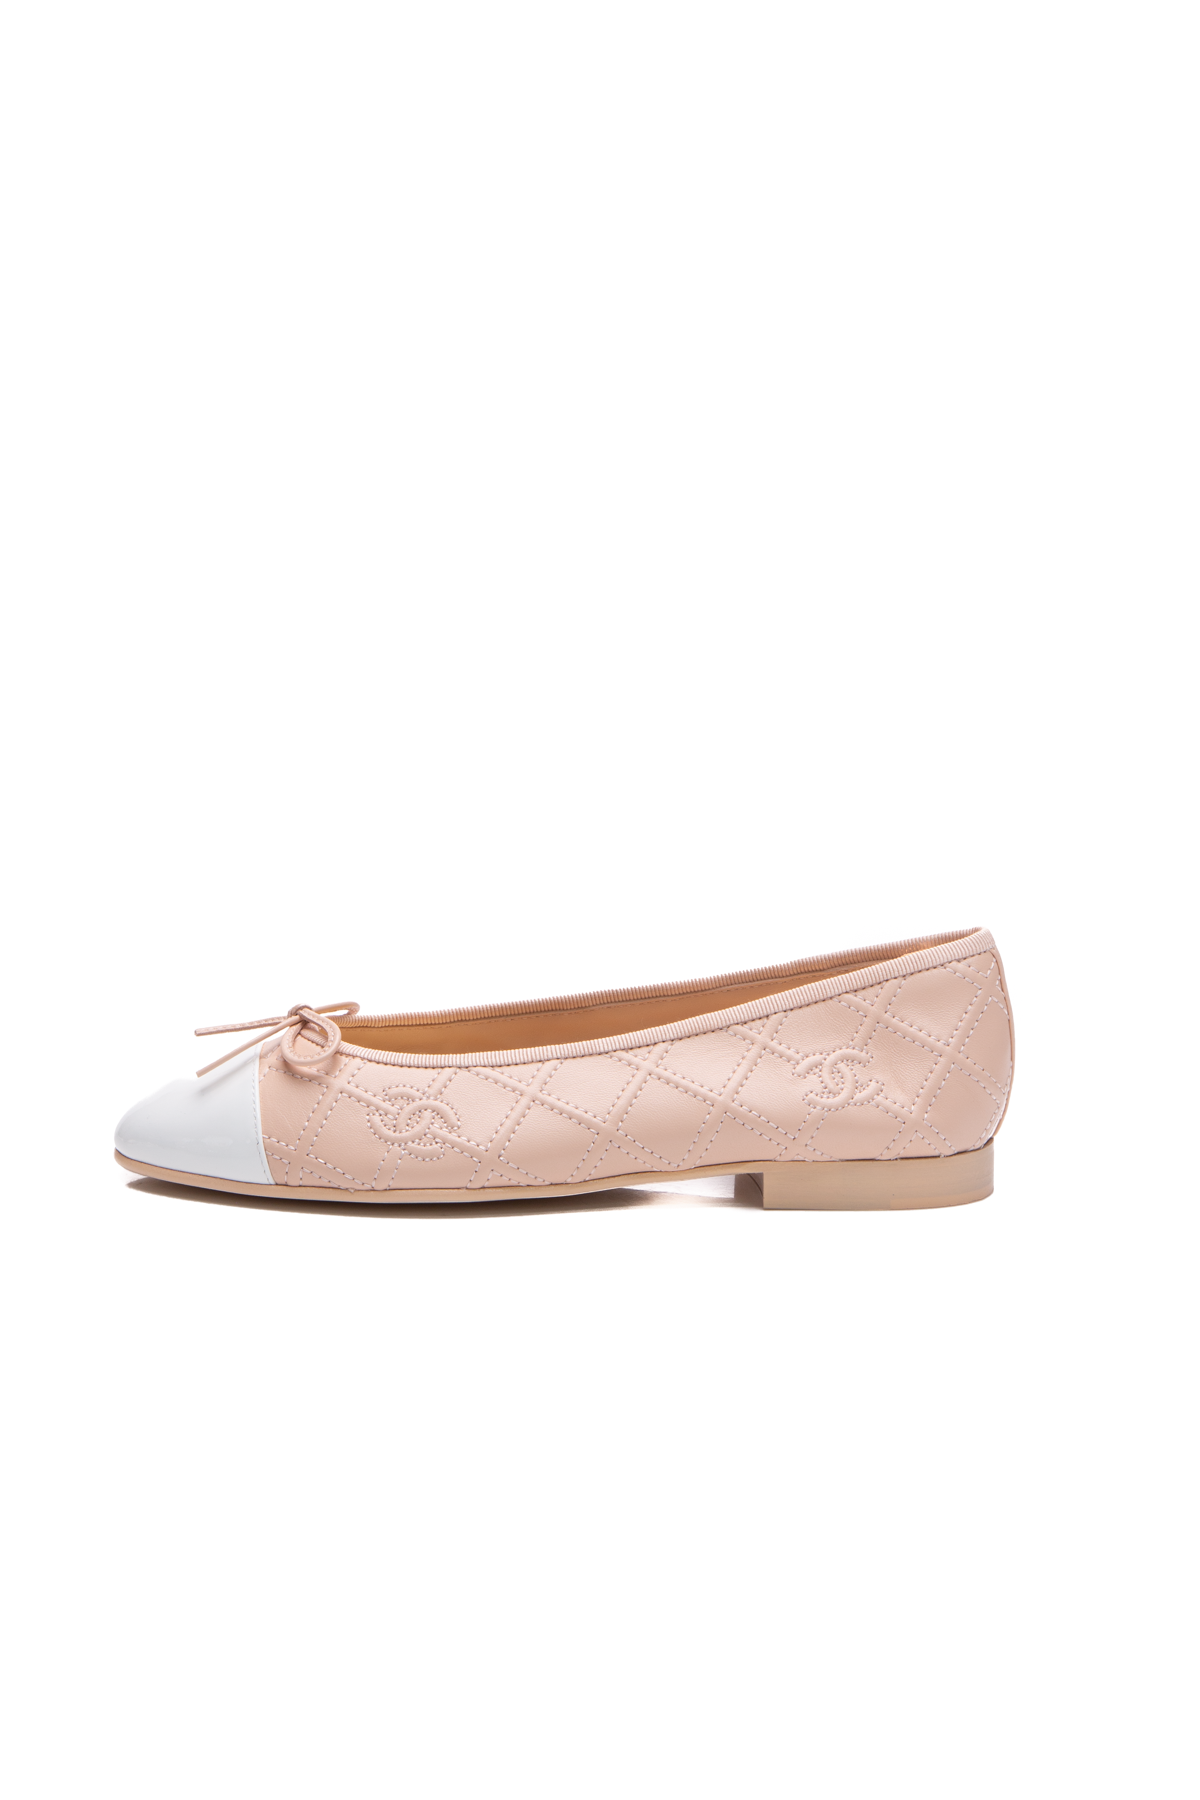 Chanel Cap Toe Ballet Flats - Size 37.5